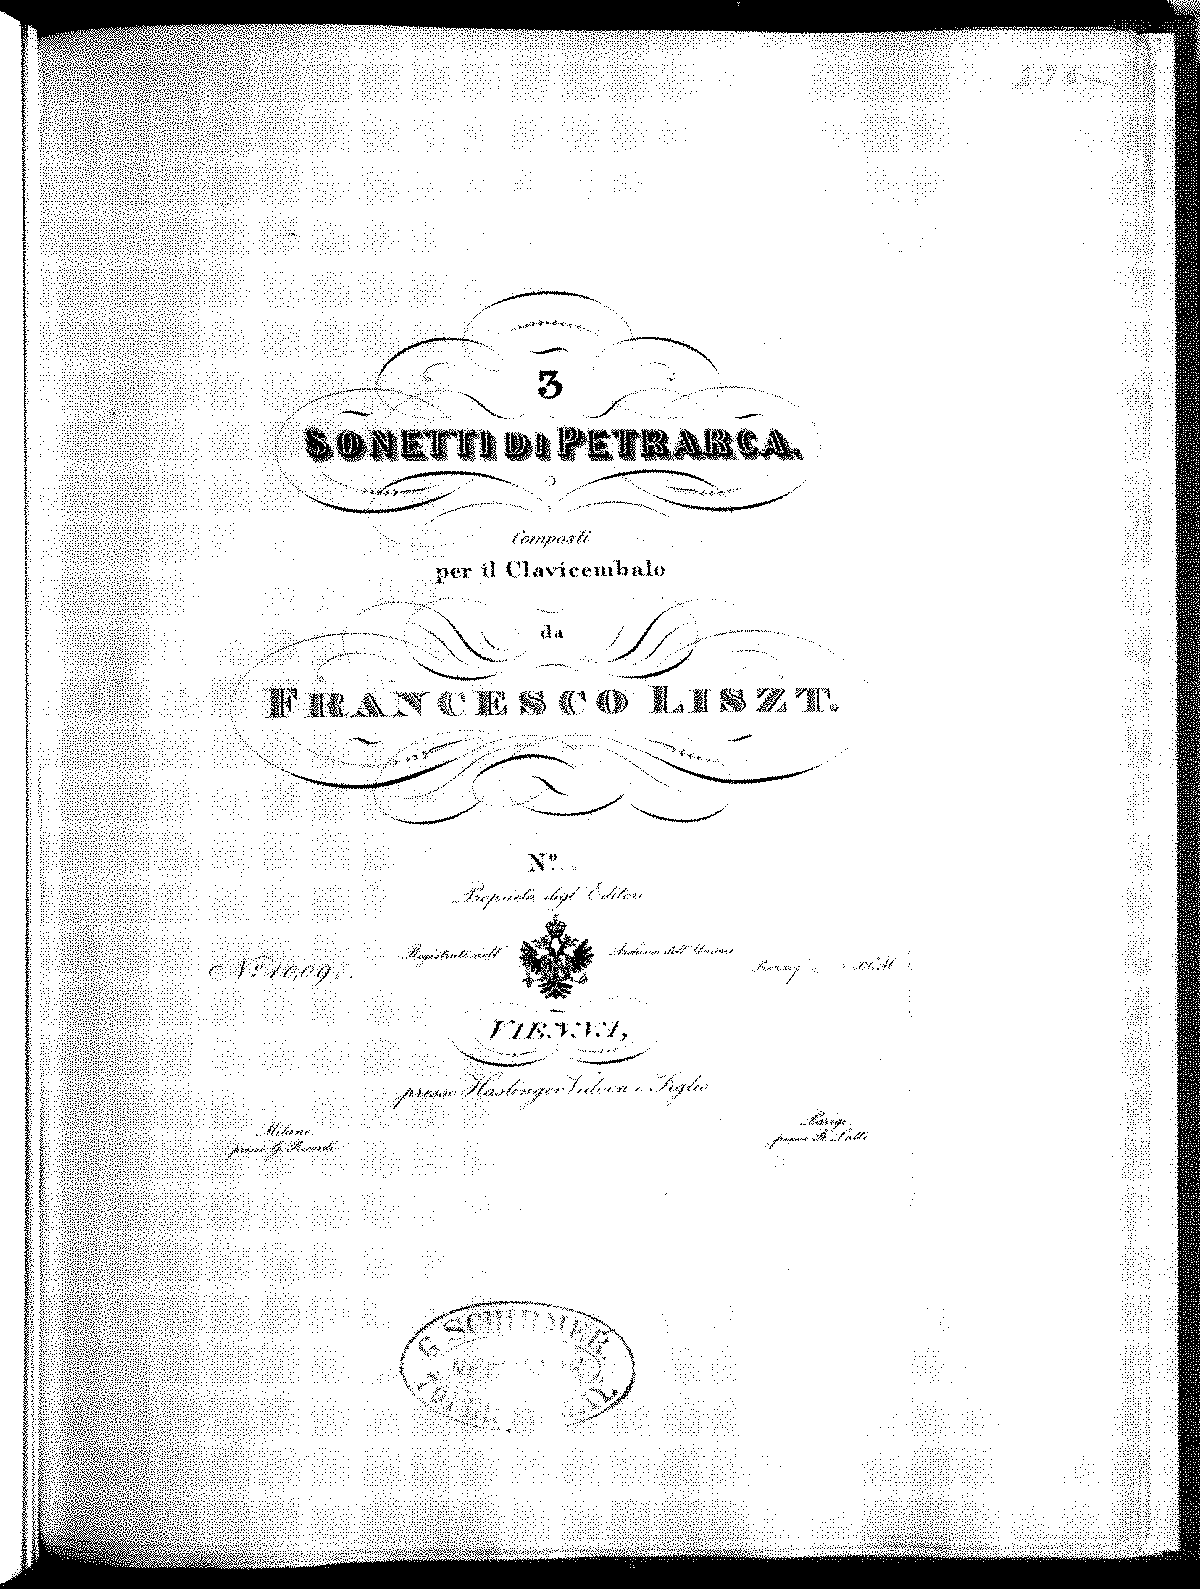 3 Sonetti del Petrarca, S.270 (Liszt, Franz) - IMSLP